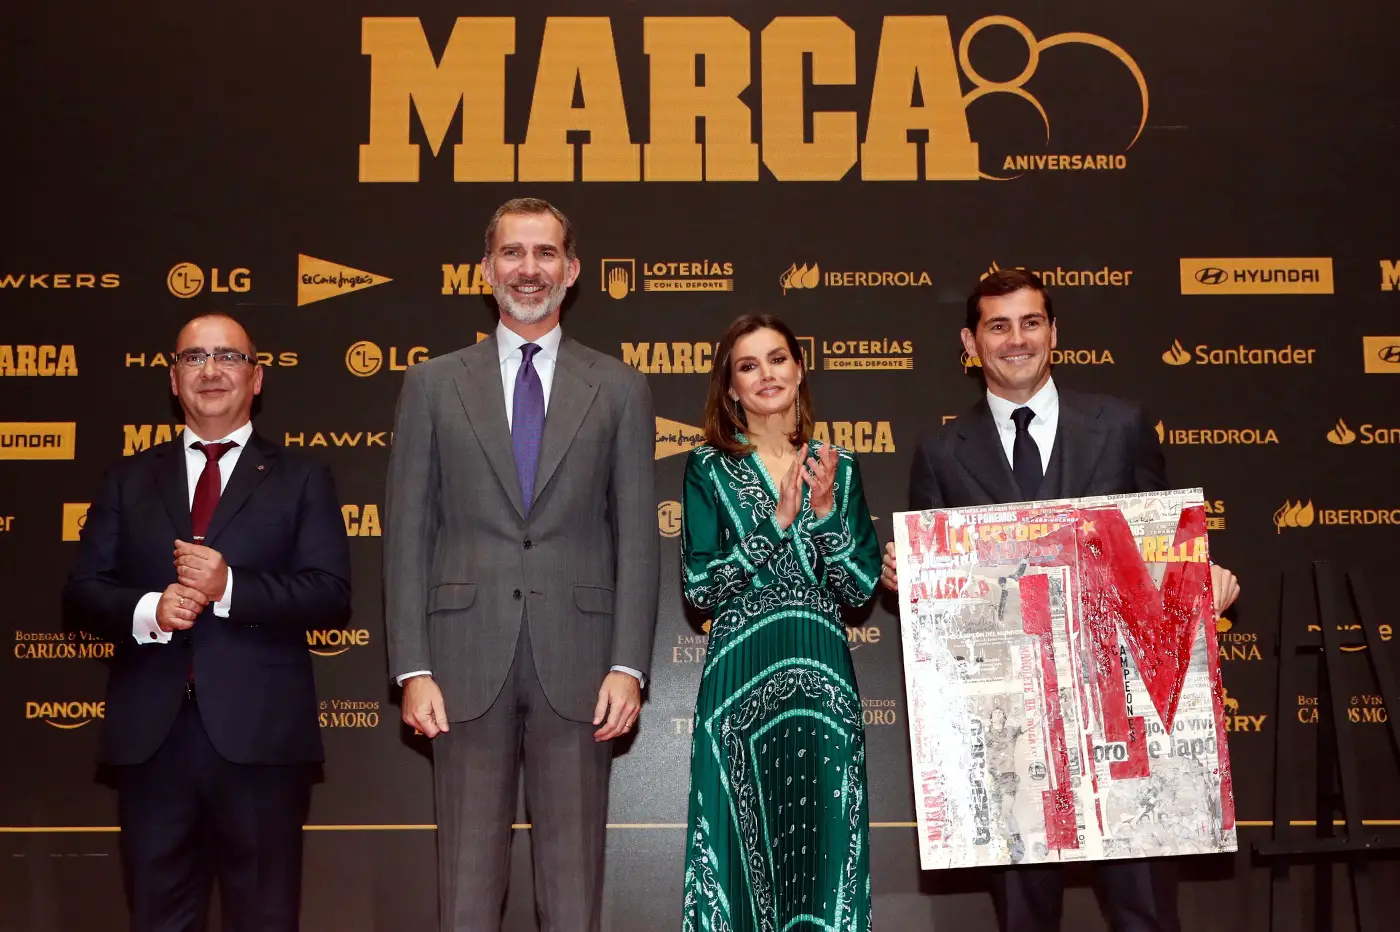 Felipe and Letizia at Marca newspaper anniversary